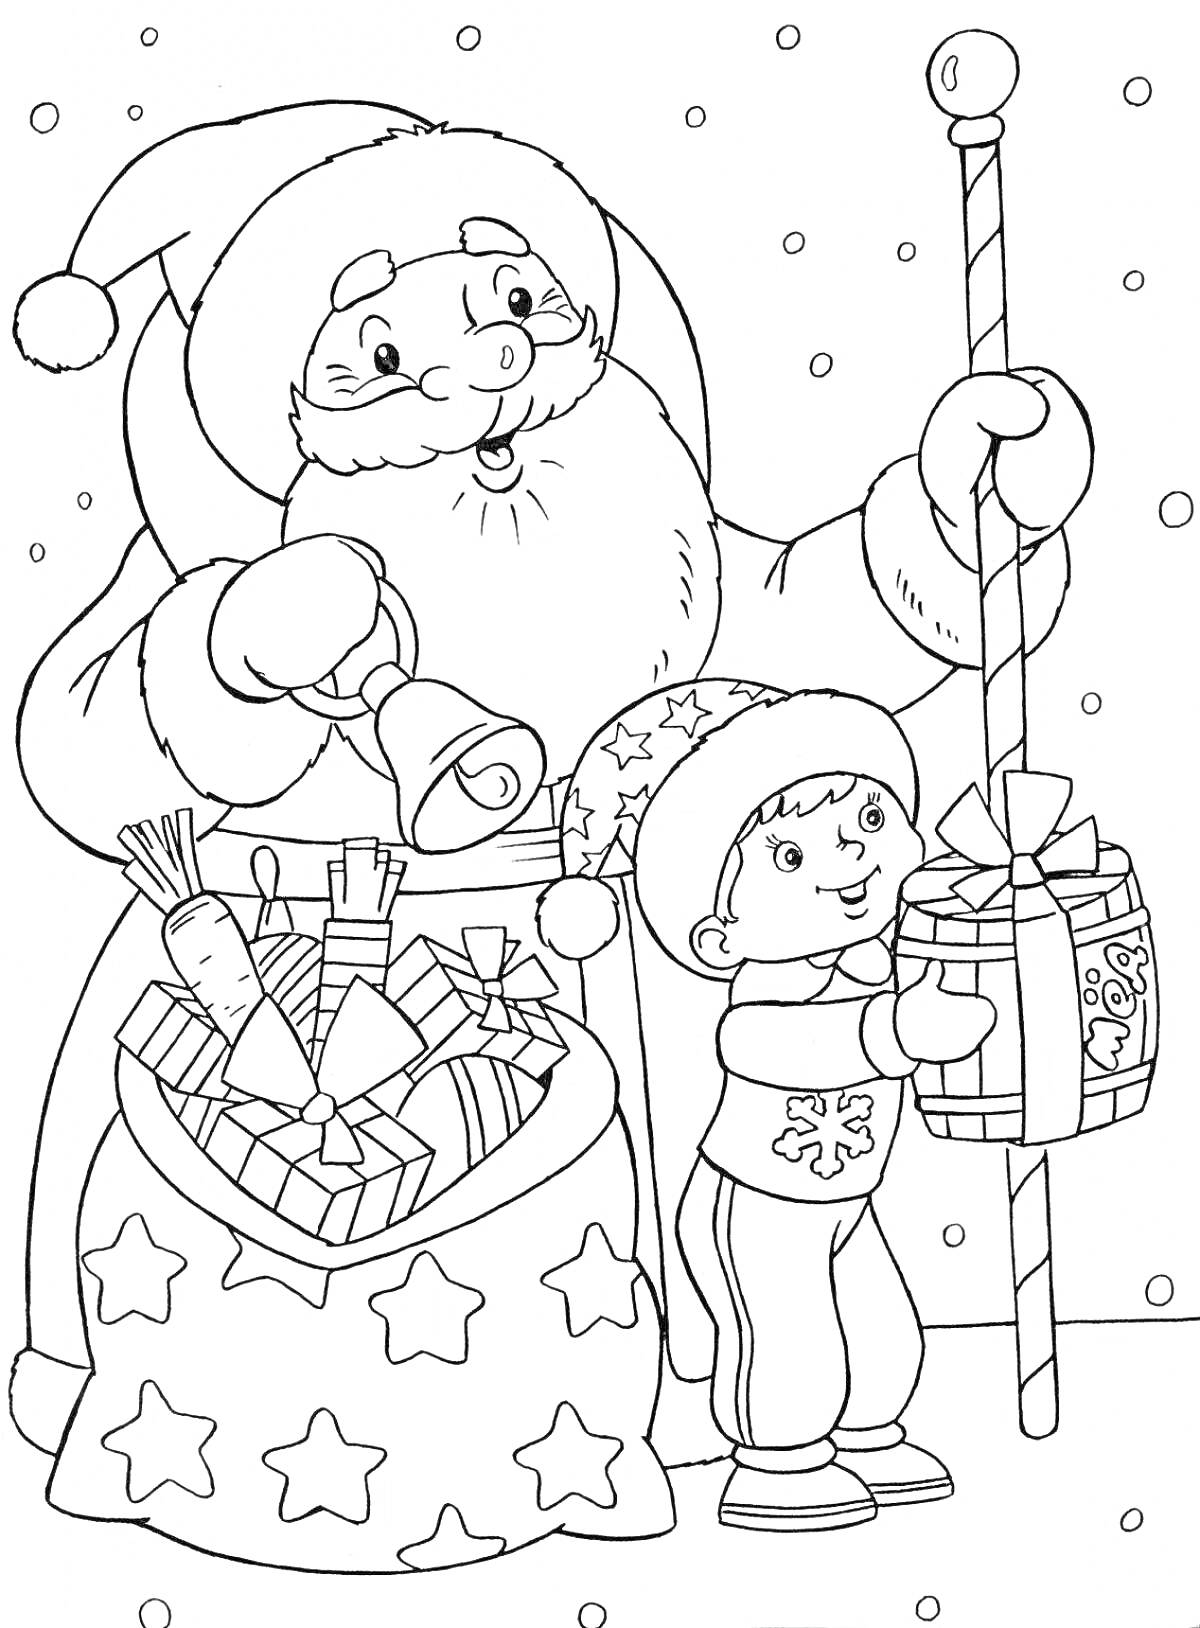 Раскраска Дед Мороз и ребенок, подарки в мешке и на посохе, снег и снегопад